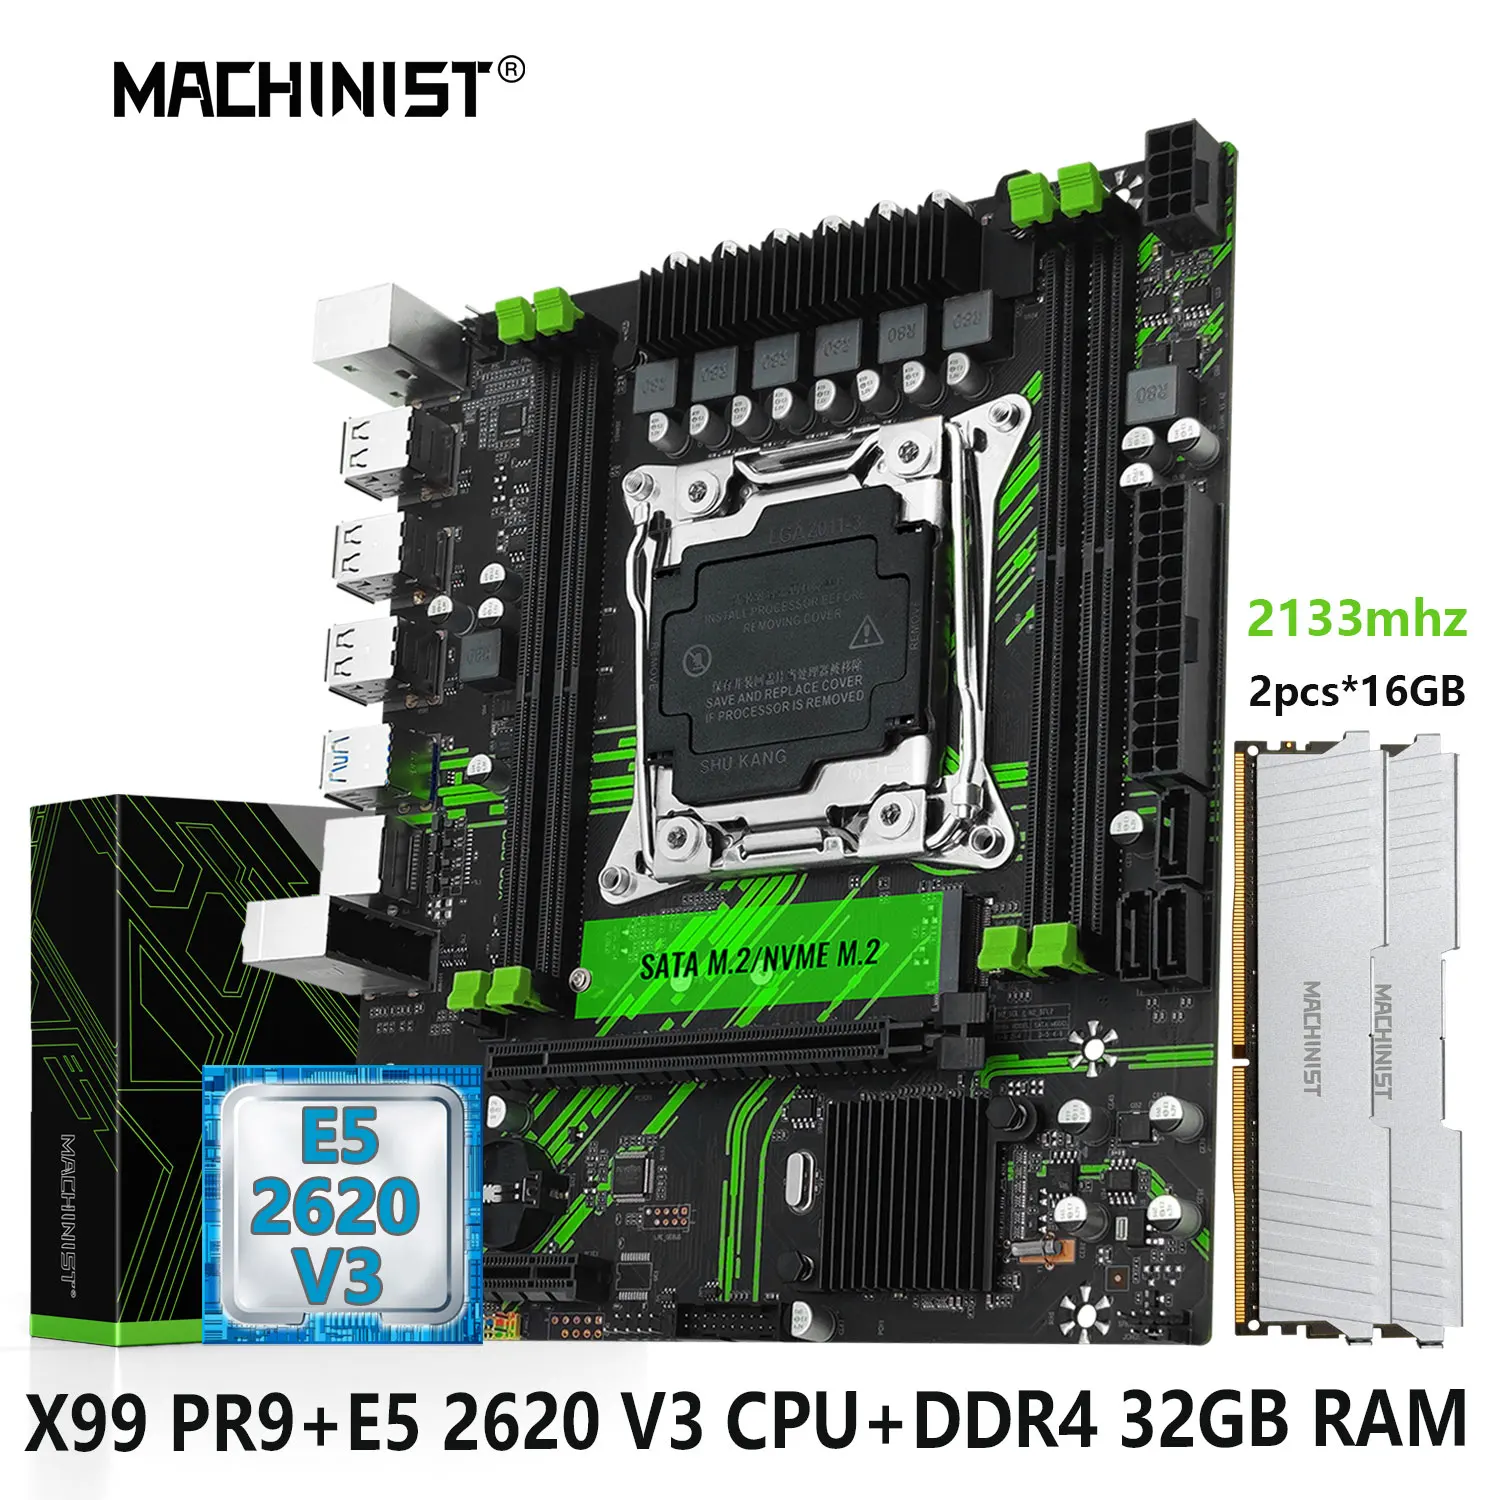 

MACHINIST PR9 Kit X99 Motherboard Set Xeon LGA 2011-3 E5 2620 V3 CPU Processor + ECC DDR4 2*16GB RAM Memory M-ATX SSD NVME M.2